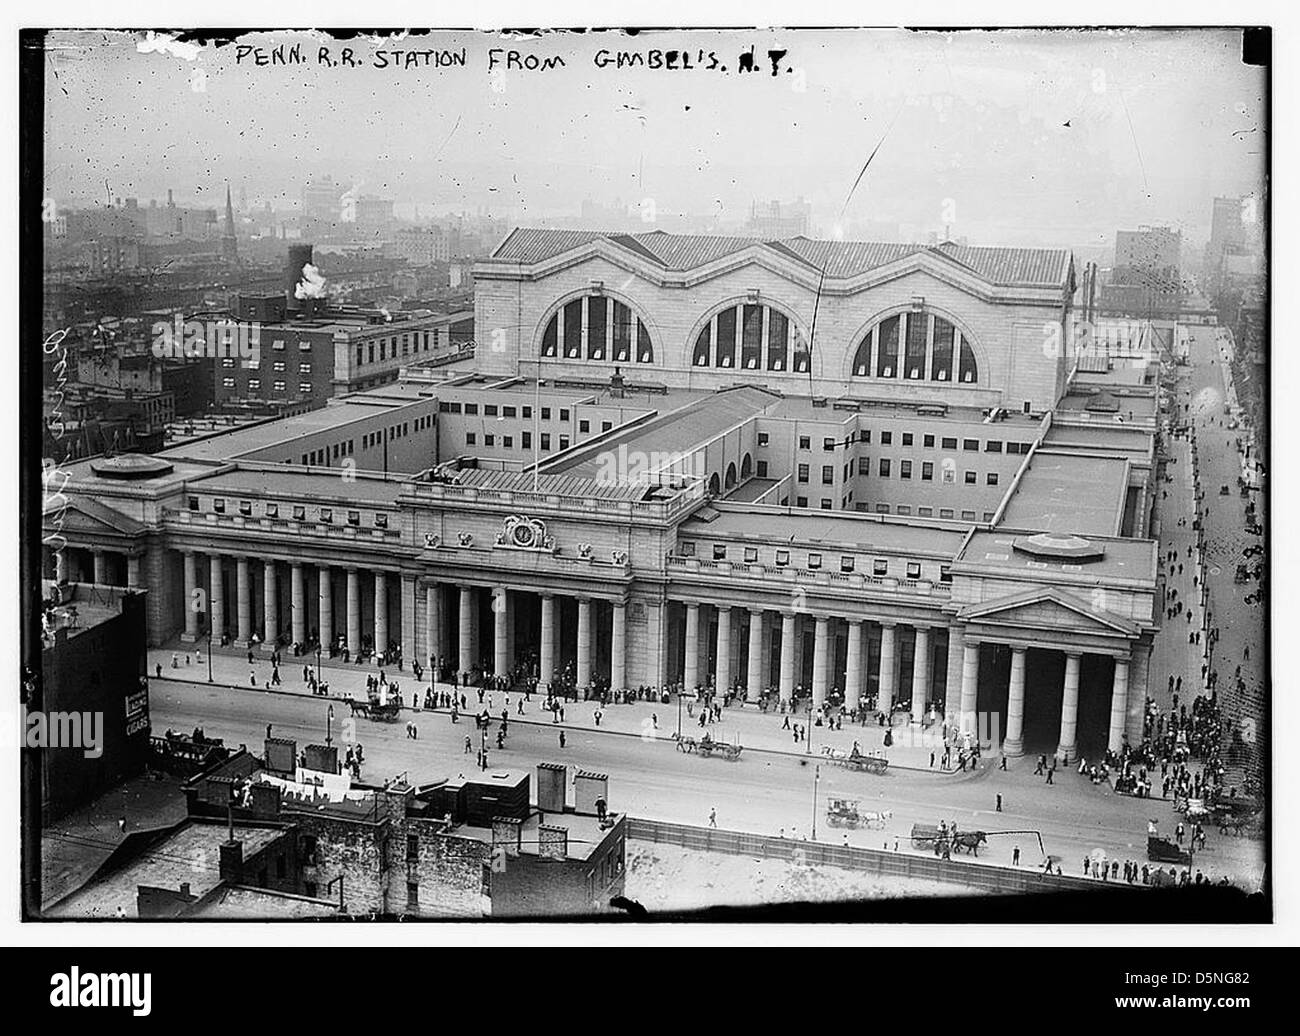 Penn RR Station von Gimbel N.Y. (LOC) Stockfoto